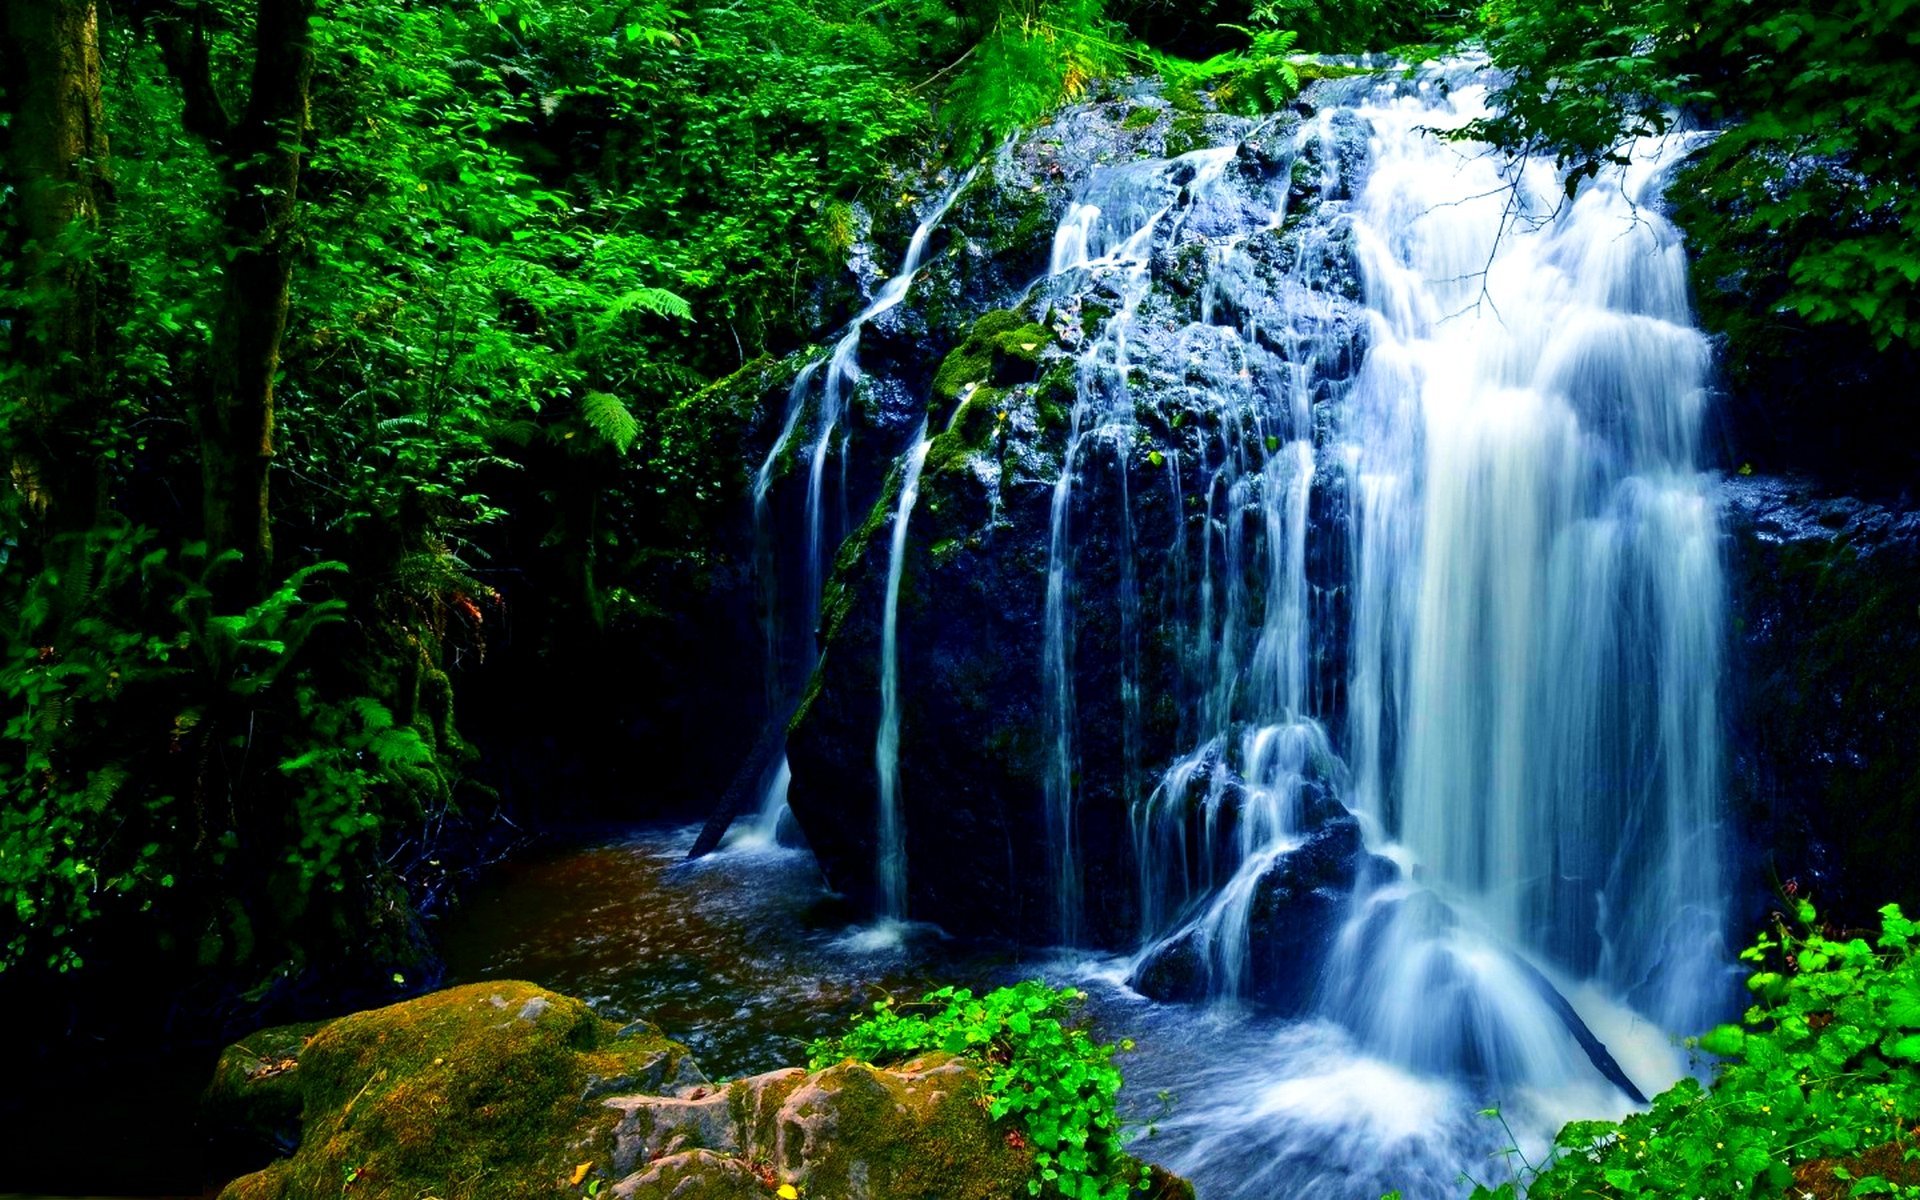 Картинки на телефон на заставку красивые живые. Природа водопад. Живая природа водопады. Красивые водопады. Обои на рабочий стол водопад.